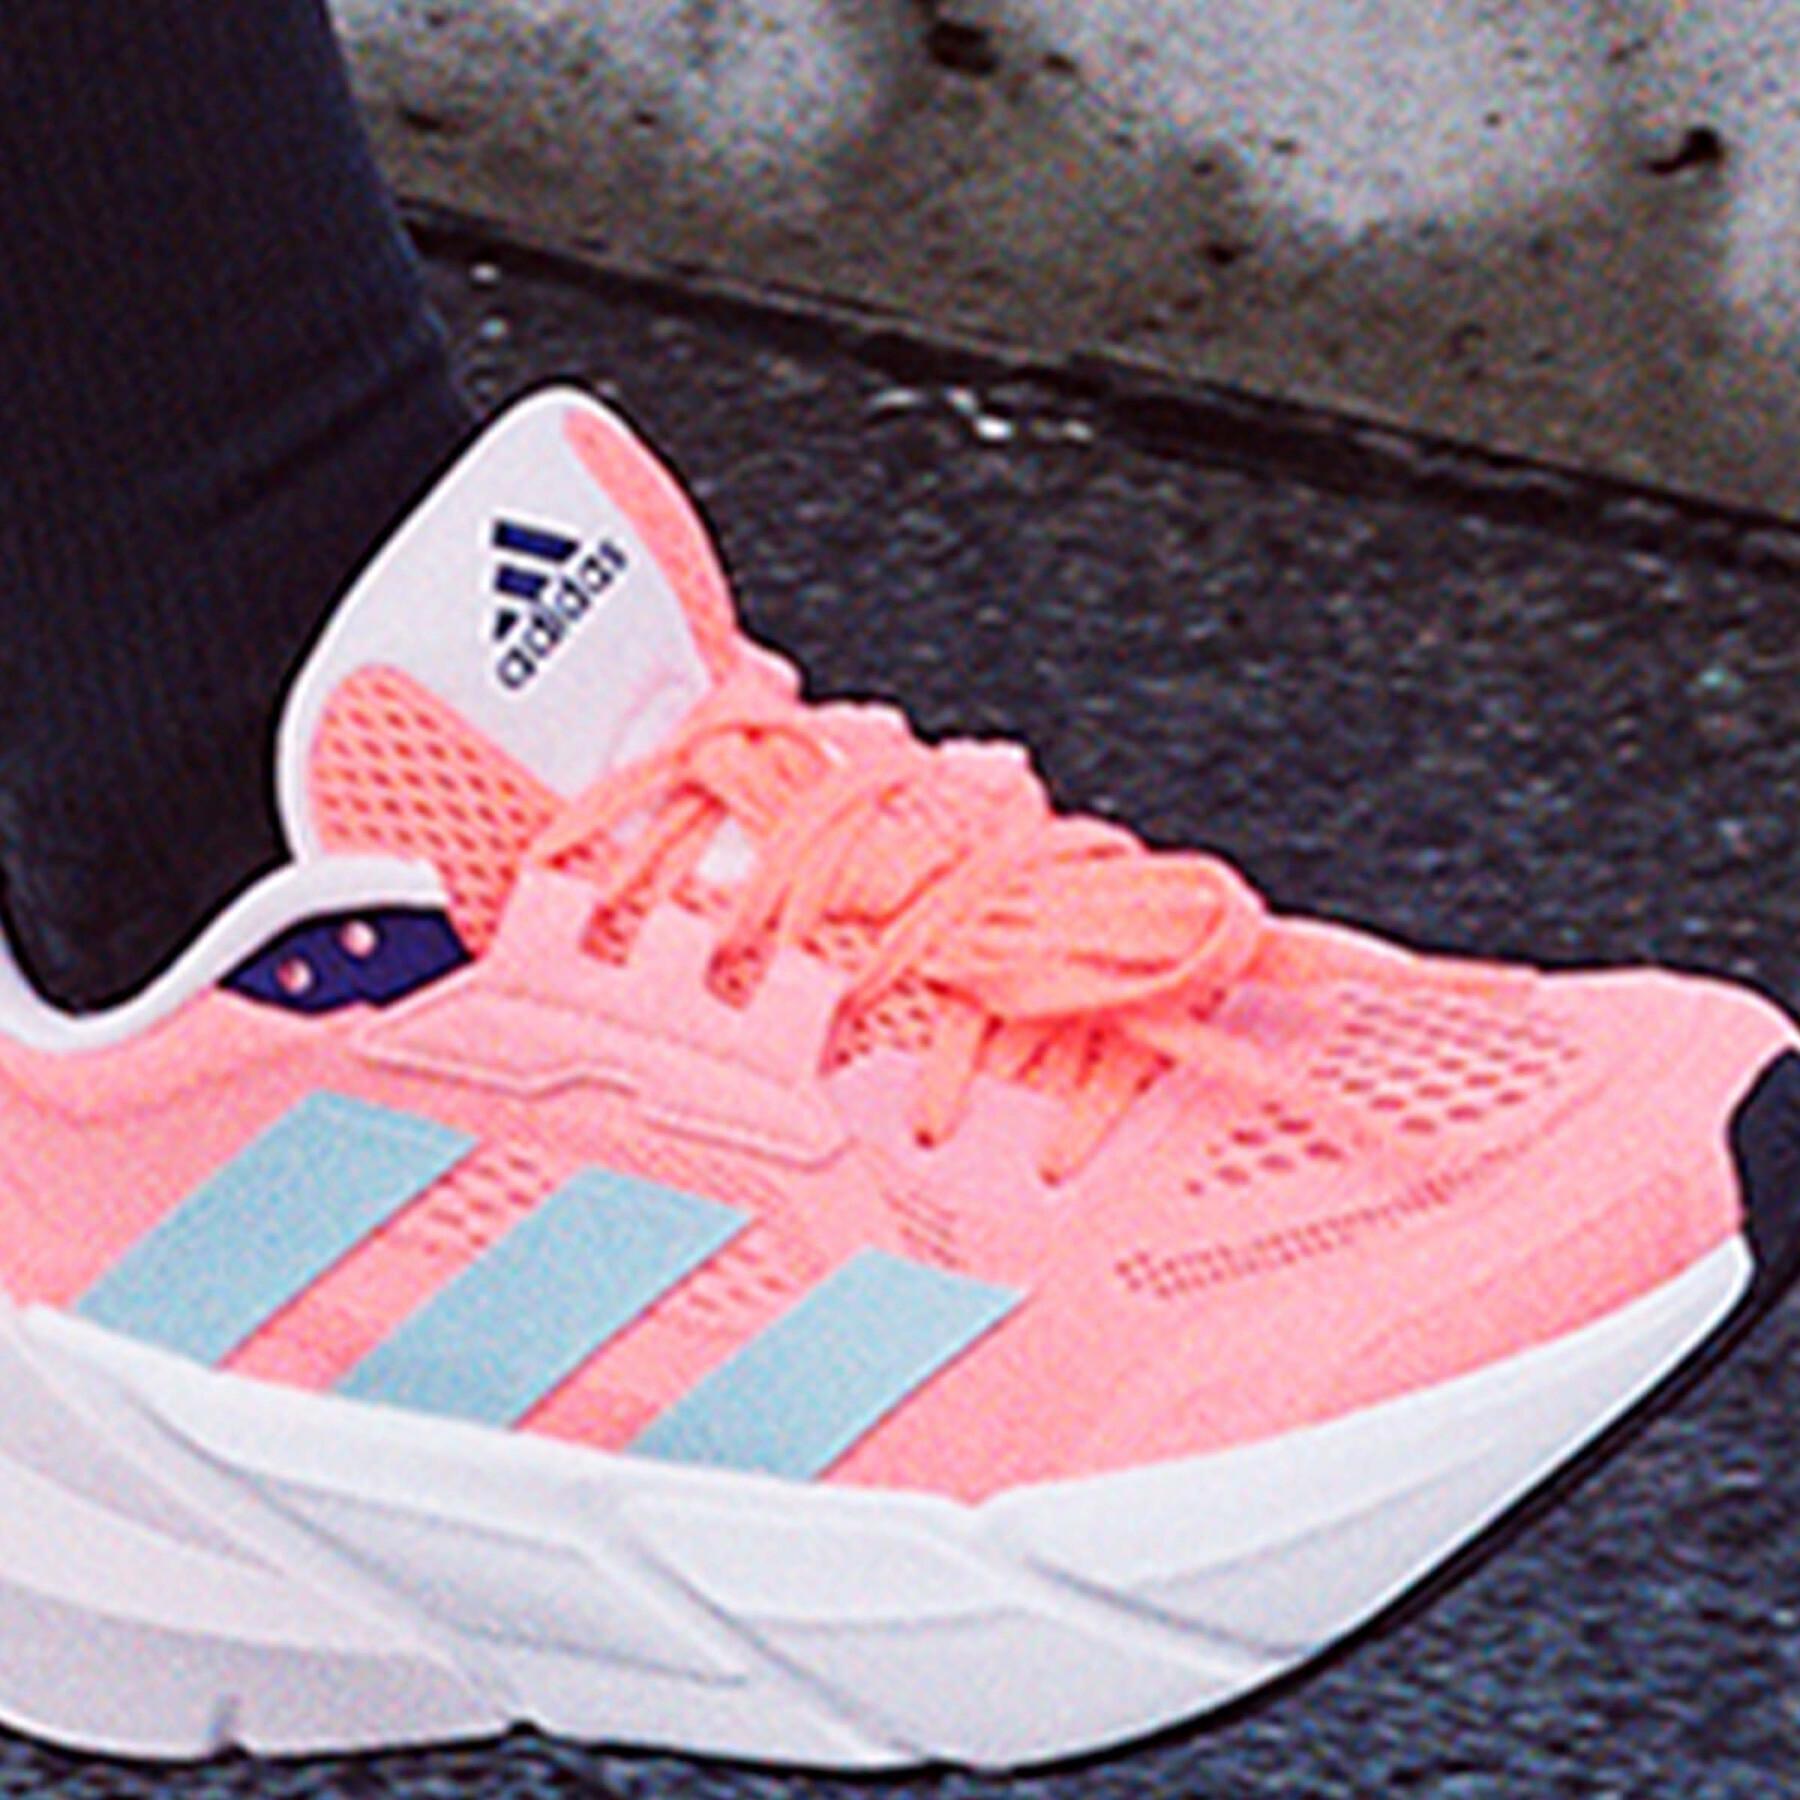  running buty dla dziewczynki adidas Adistar